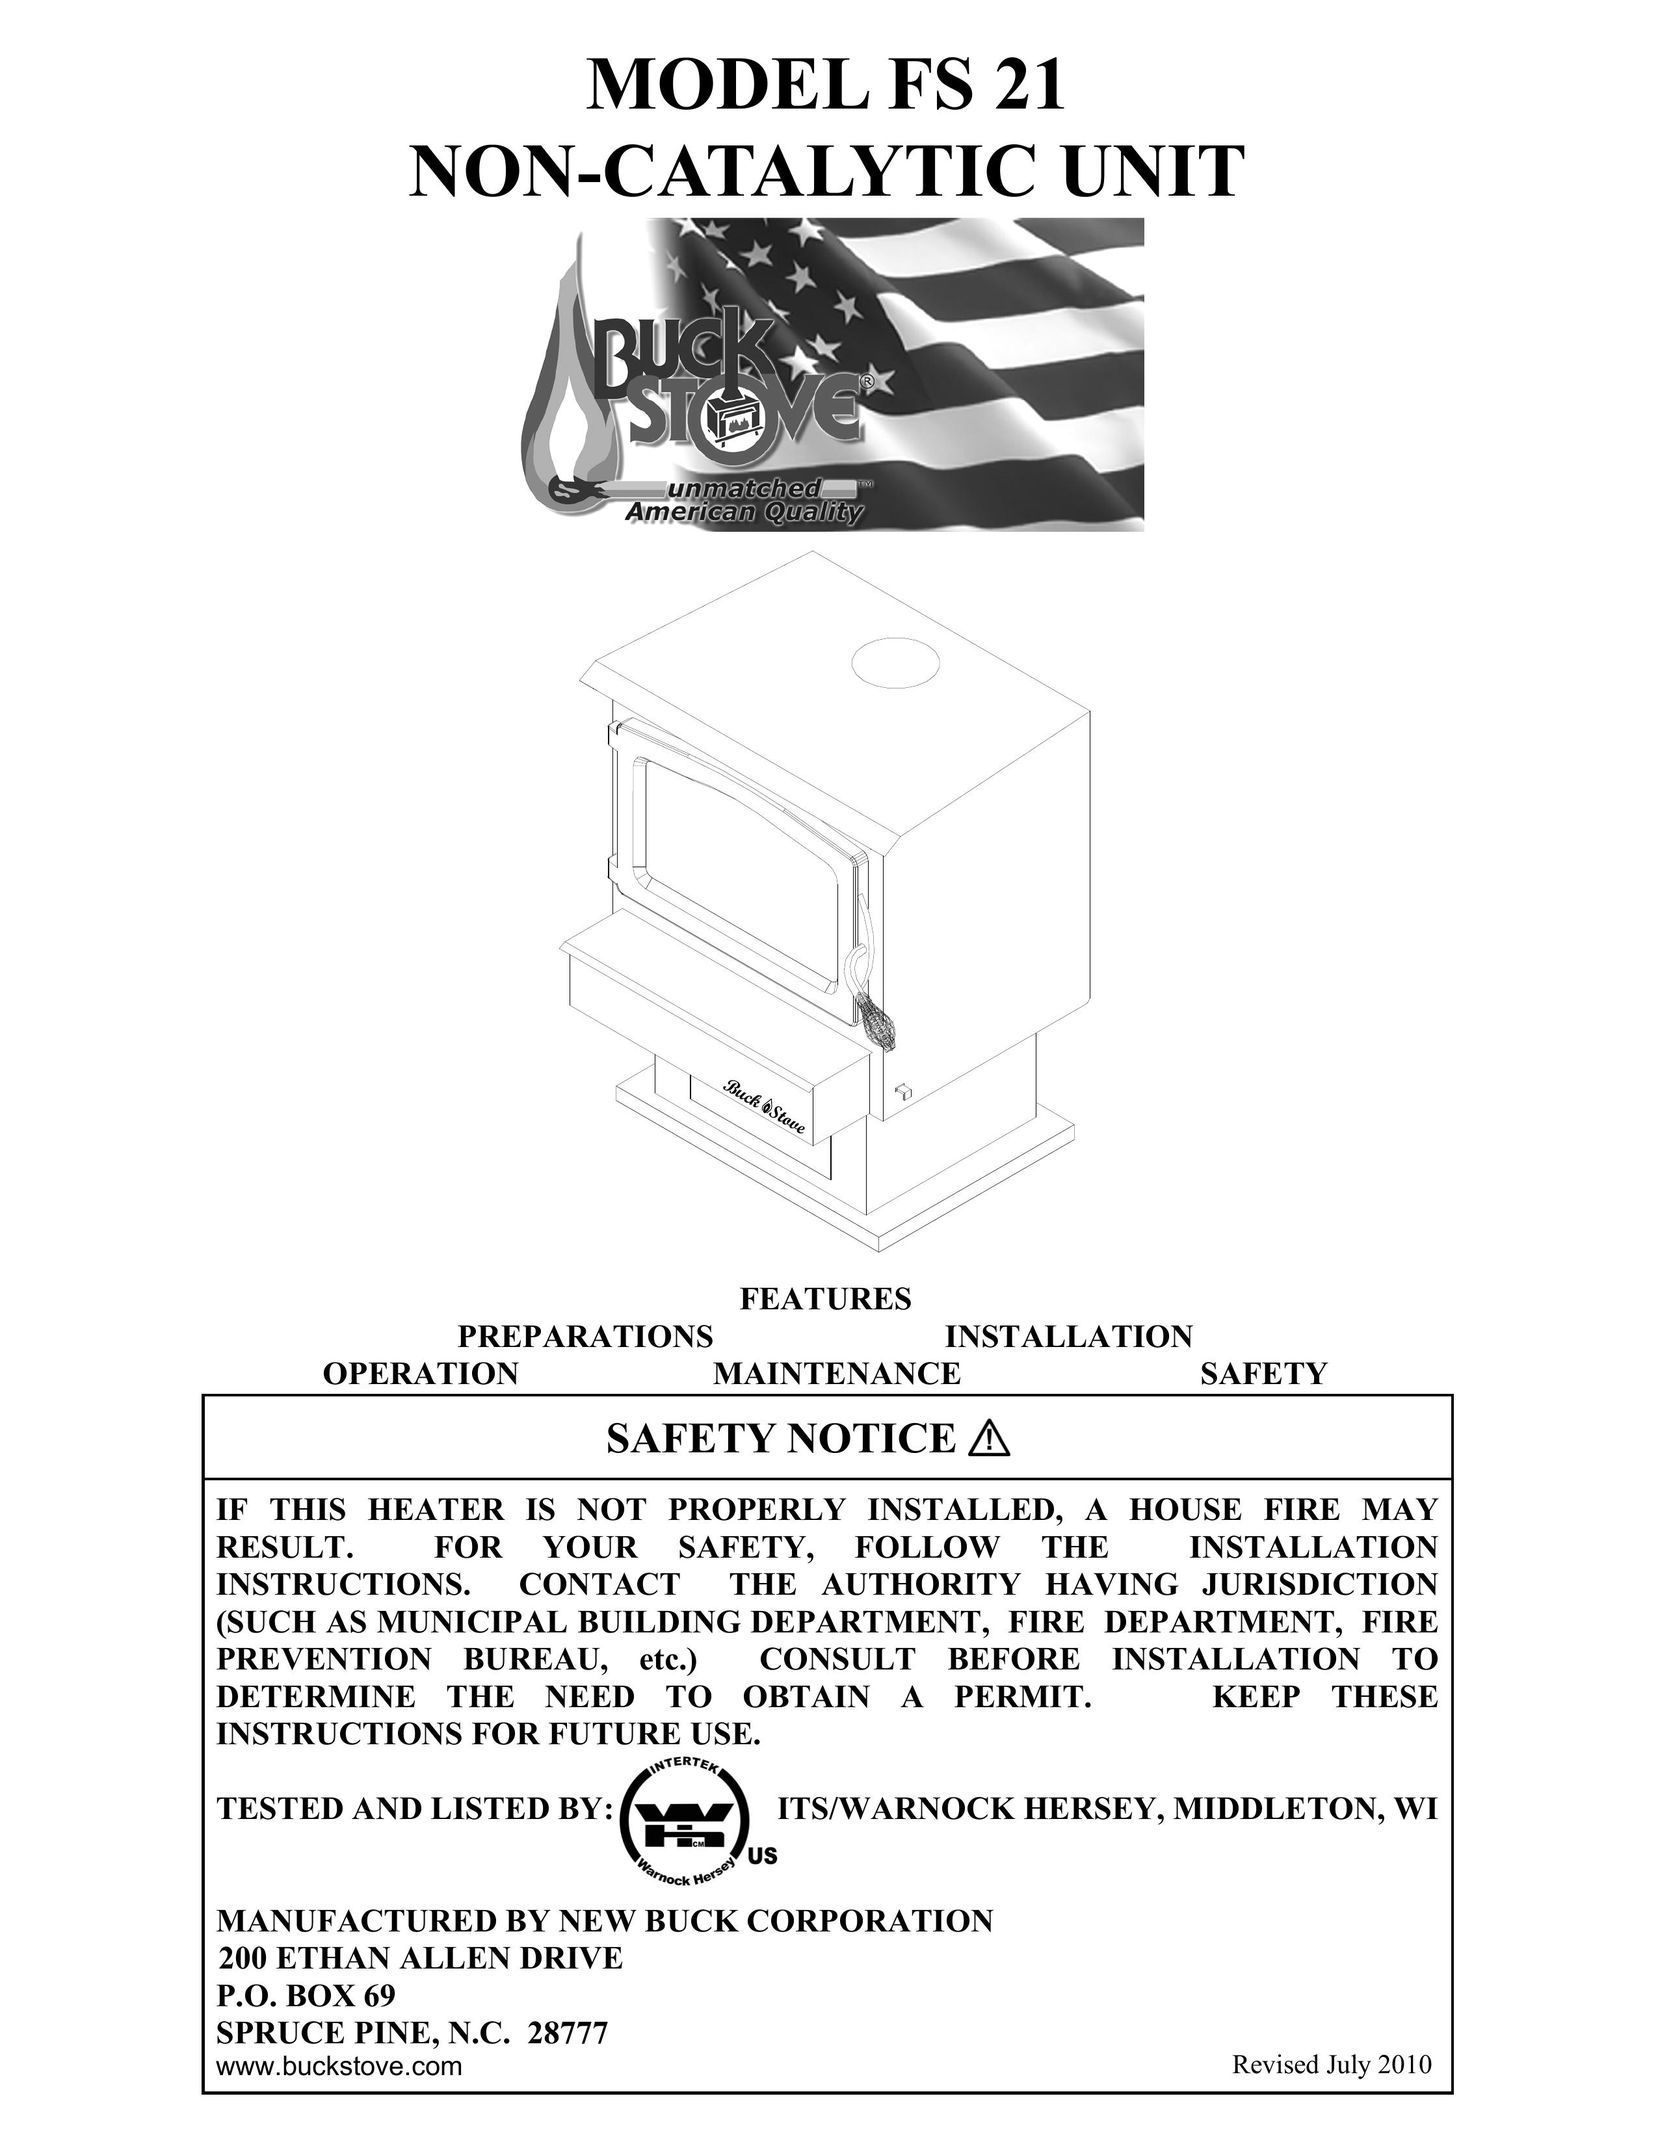 New Buck Corporation FS 21 Stove User Manual